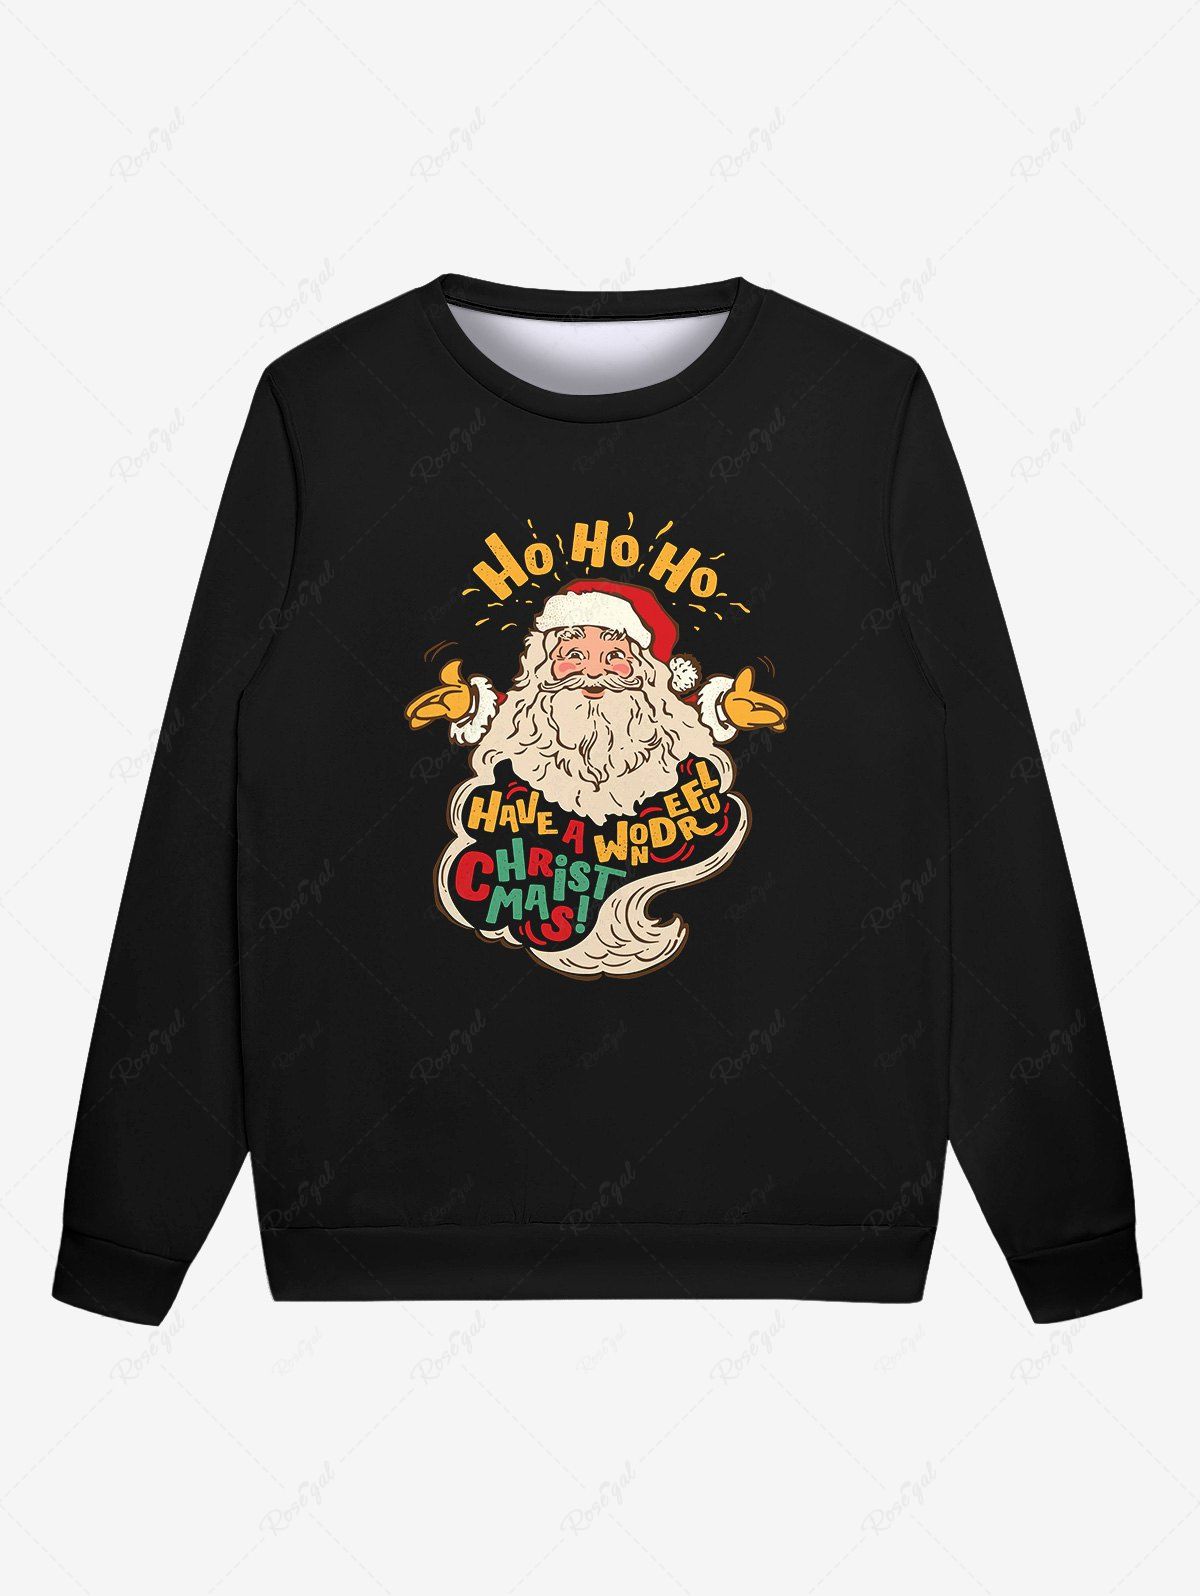 Fancy Gothic Christmas Santa Clause Letters Print Crew Neck Sweatshirt For Men  